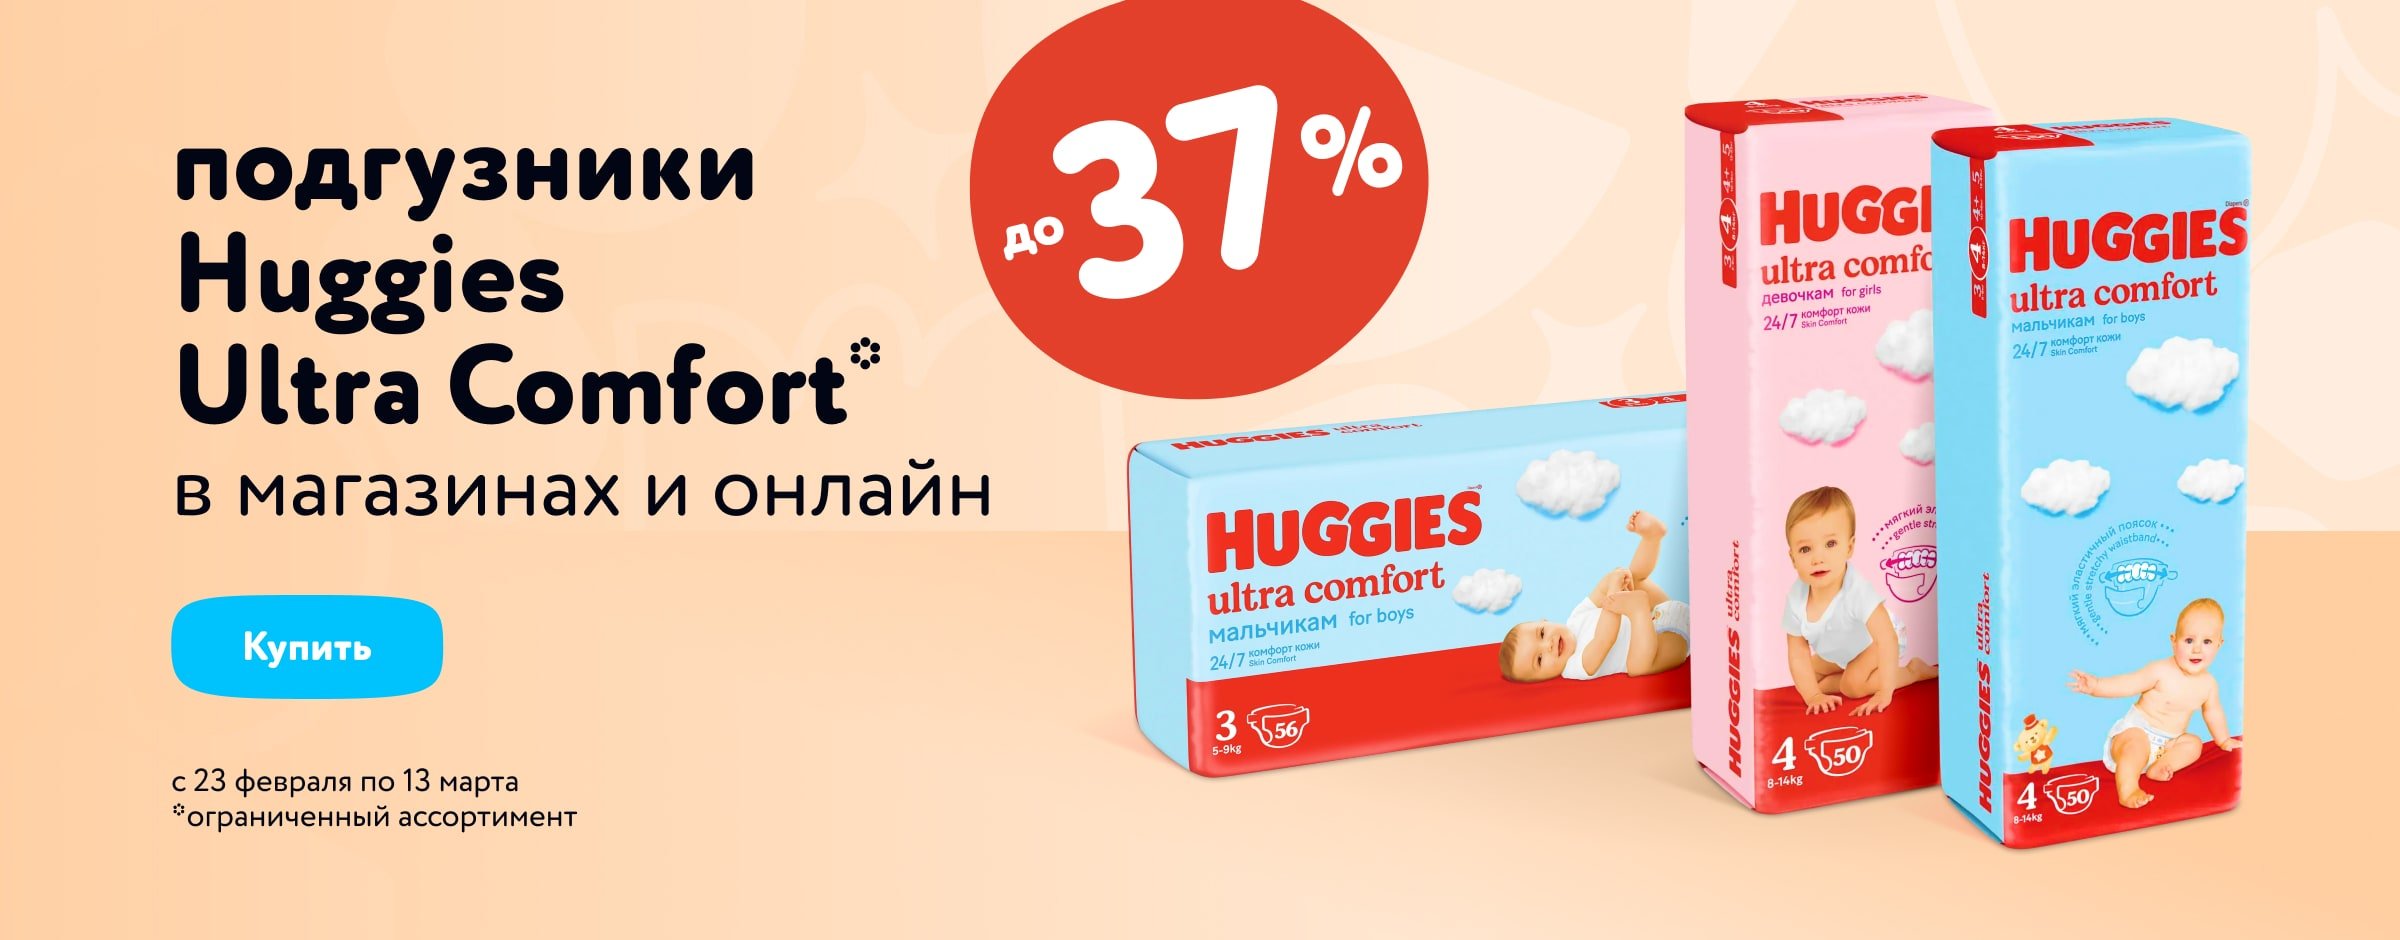 Скидки до 37 % на подгузники Huggies Ultra Comfort 3